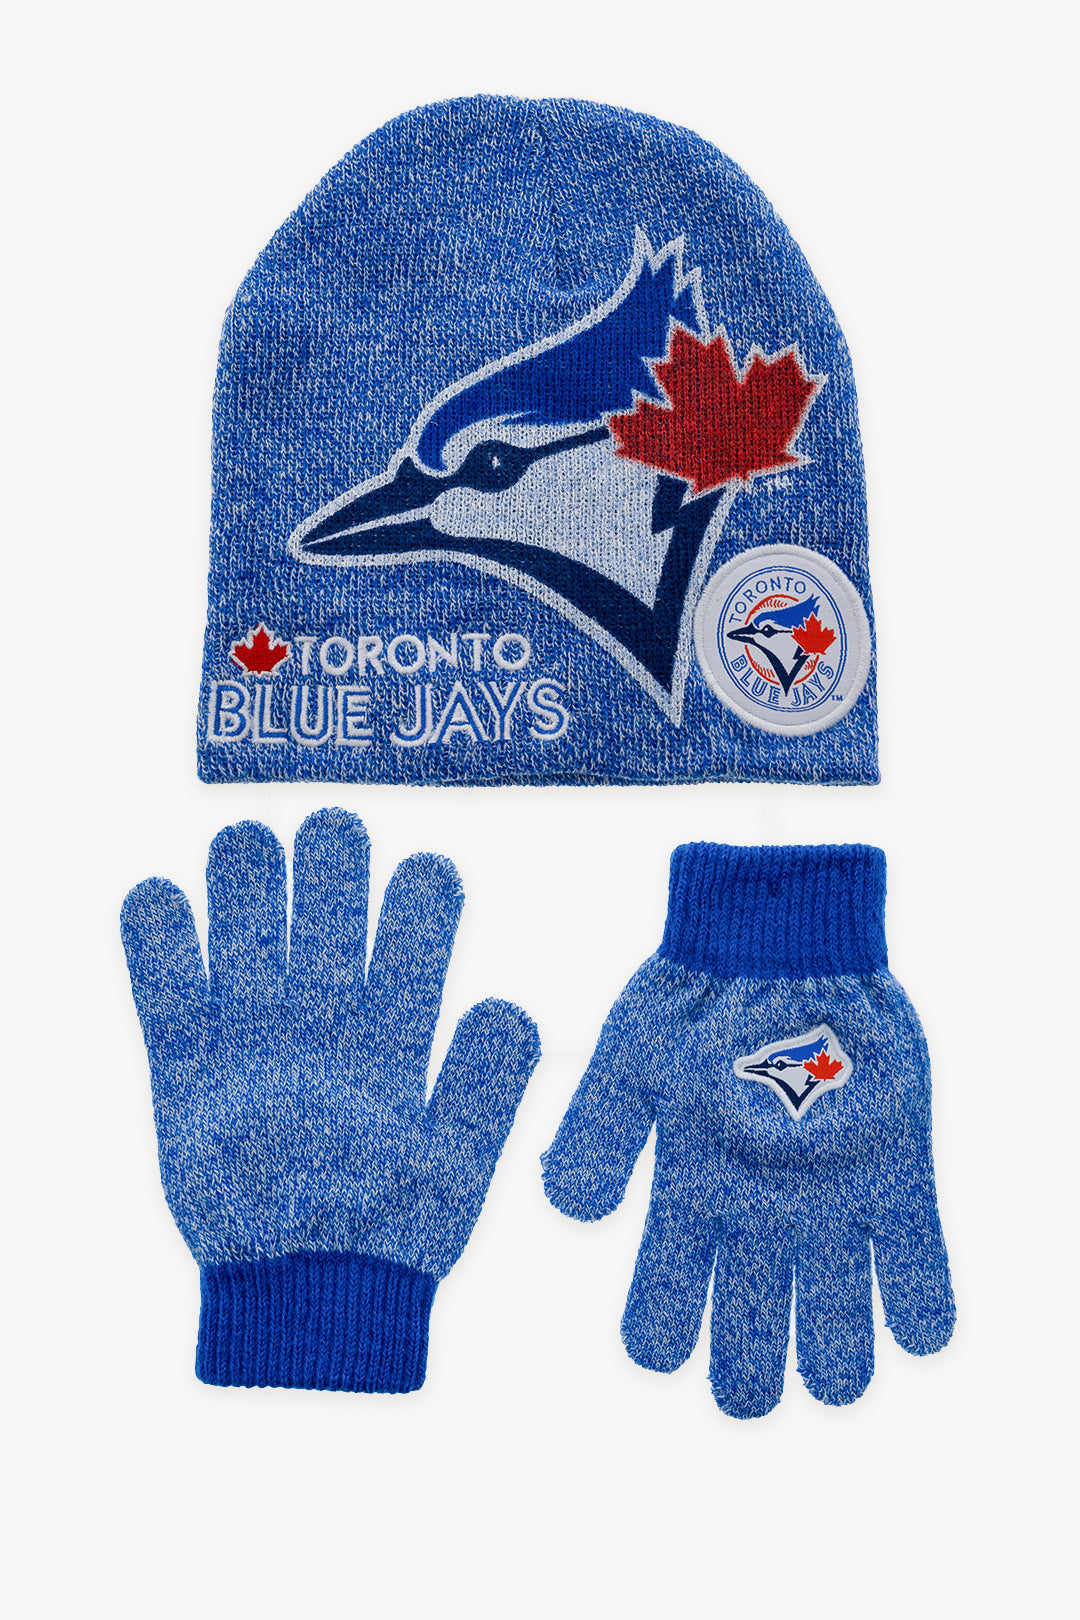 Blue Jays Winter Hat and Glove Set